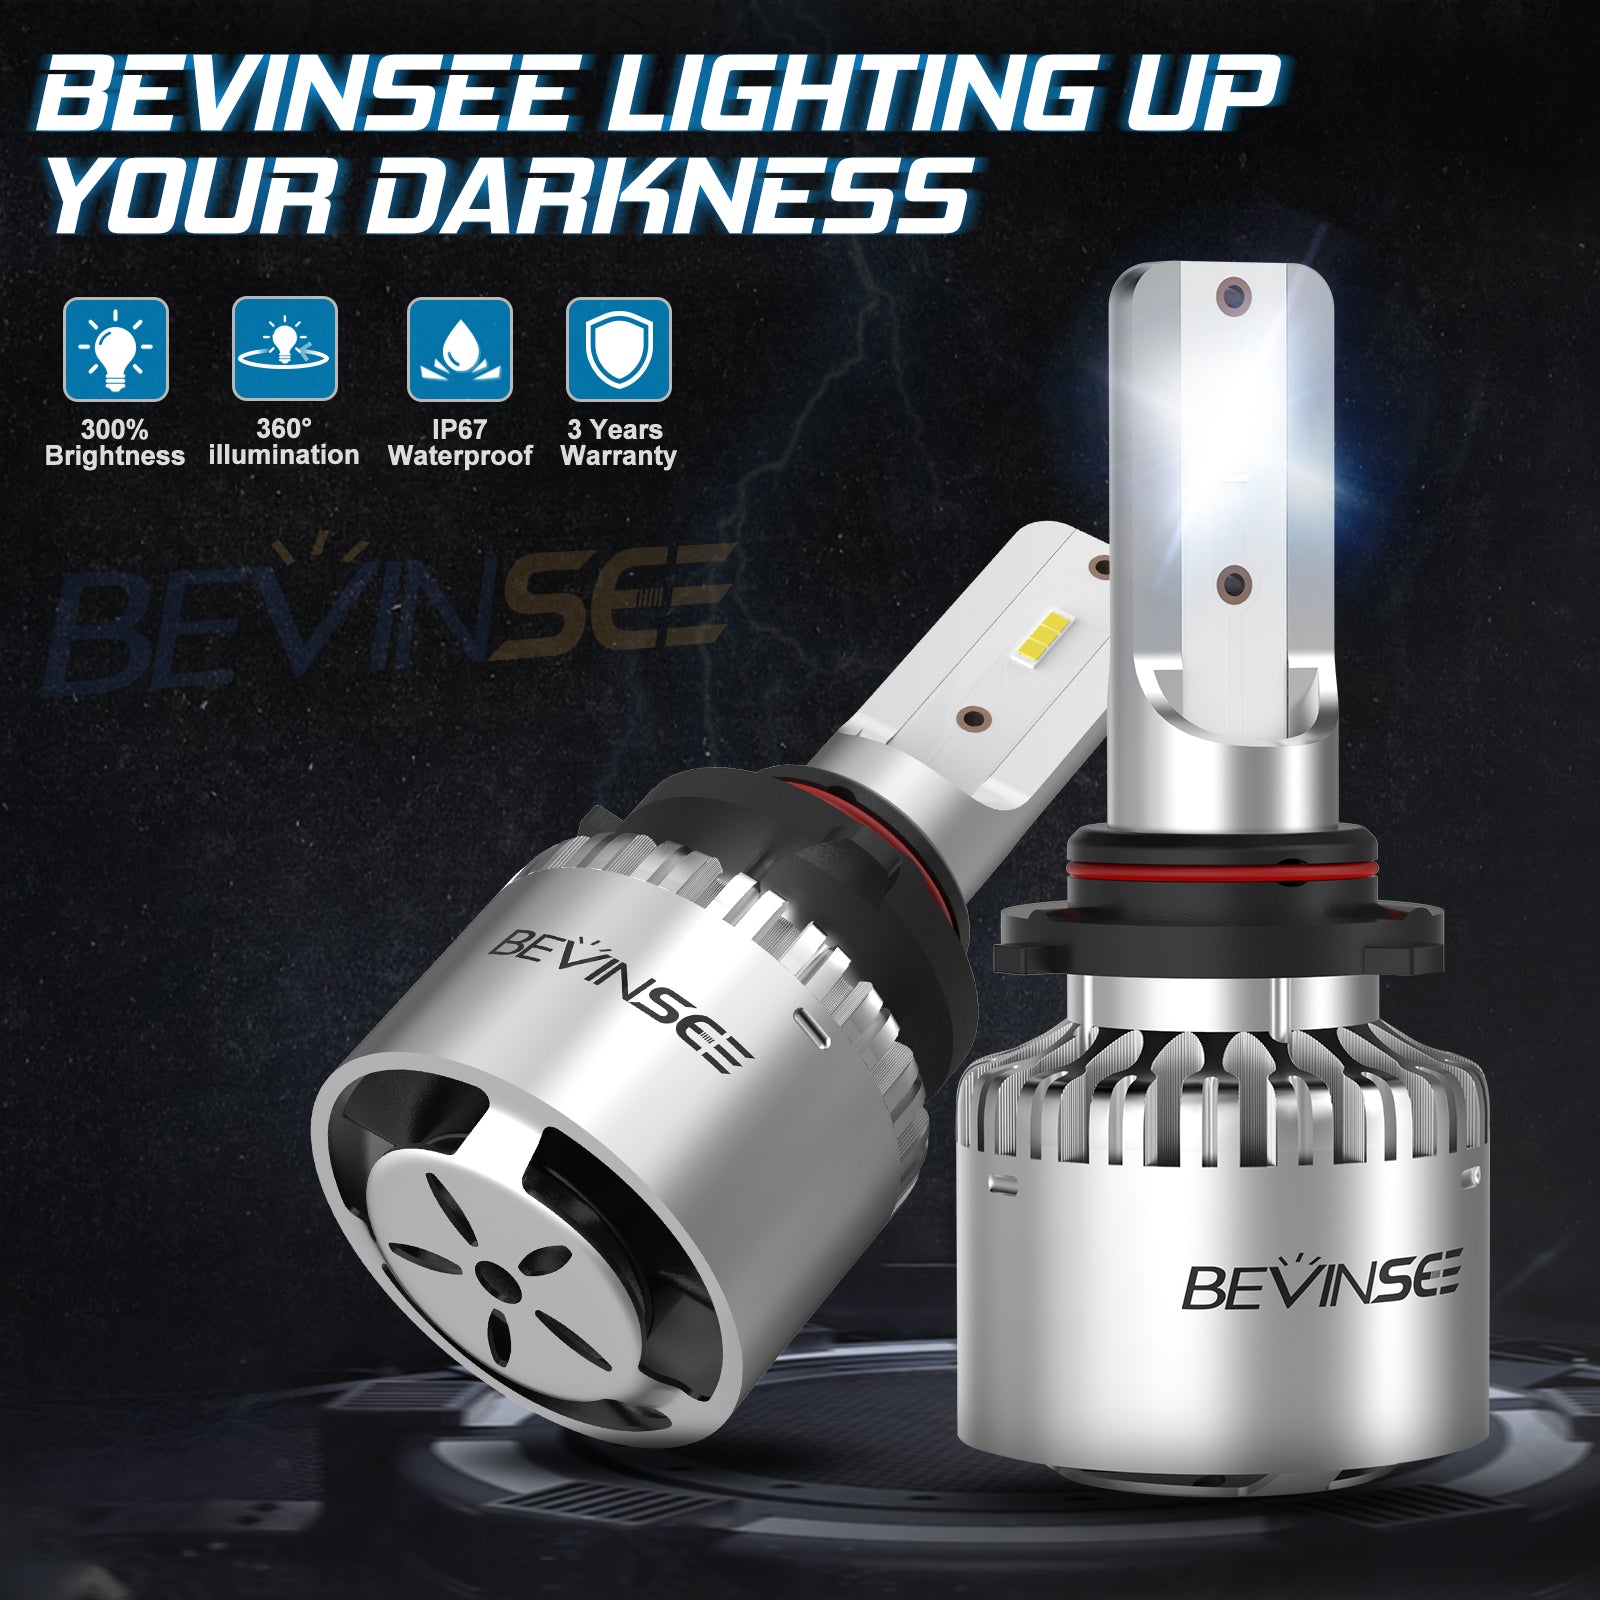 2 X 9006 HB4 LED Headlight Fog Light Bulbs For BMW 3 Series E46 E60 E63 E90 8000LM 6000K Globes White